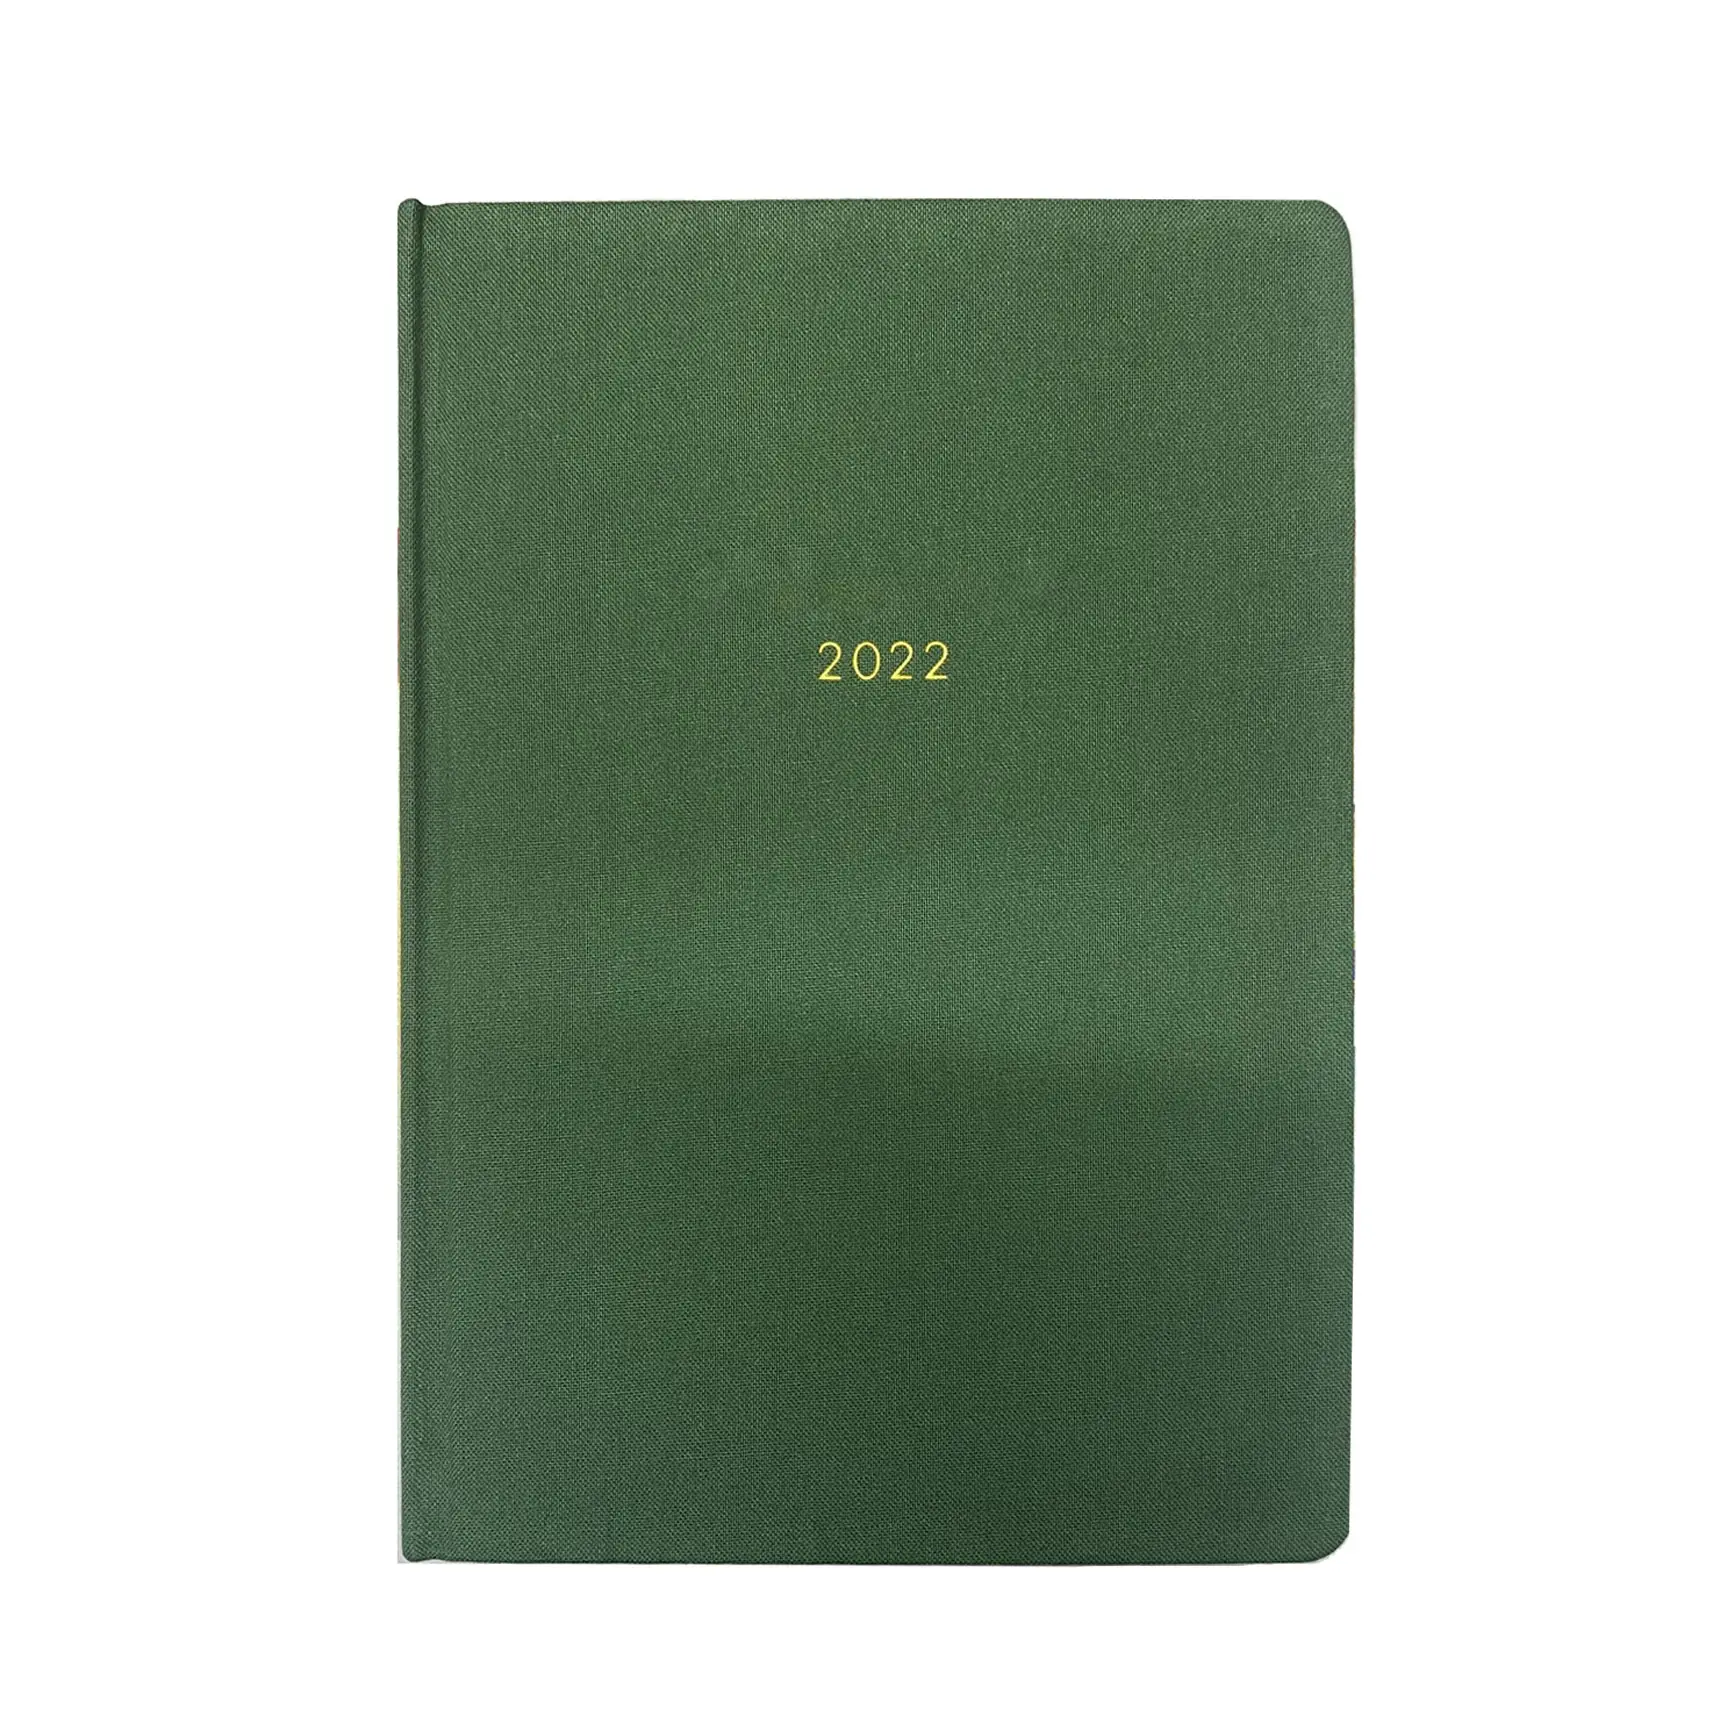 2022 Doek Linnen Materiaal Notebooks Stof Cover Planner Dagboek Gift Boek Met Platte Gelegd Undated Pagina 'S